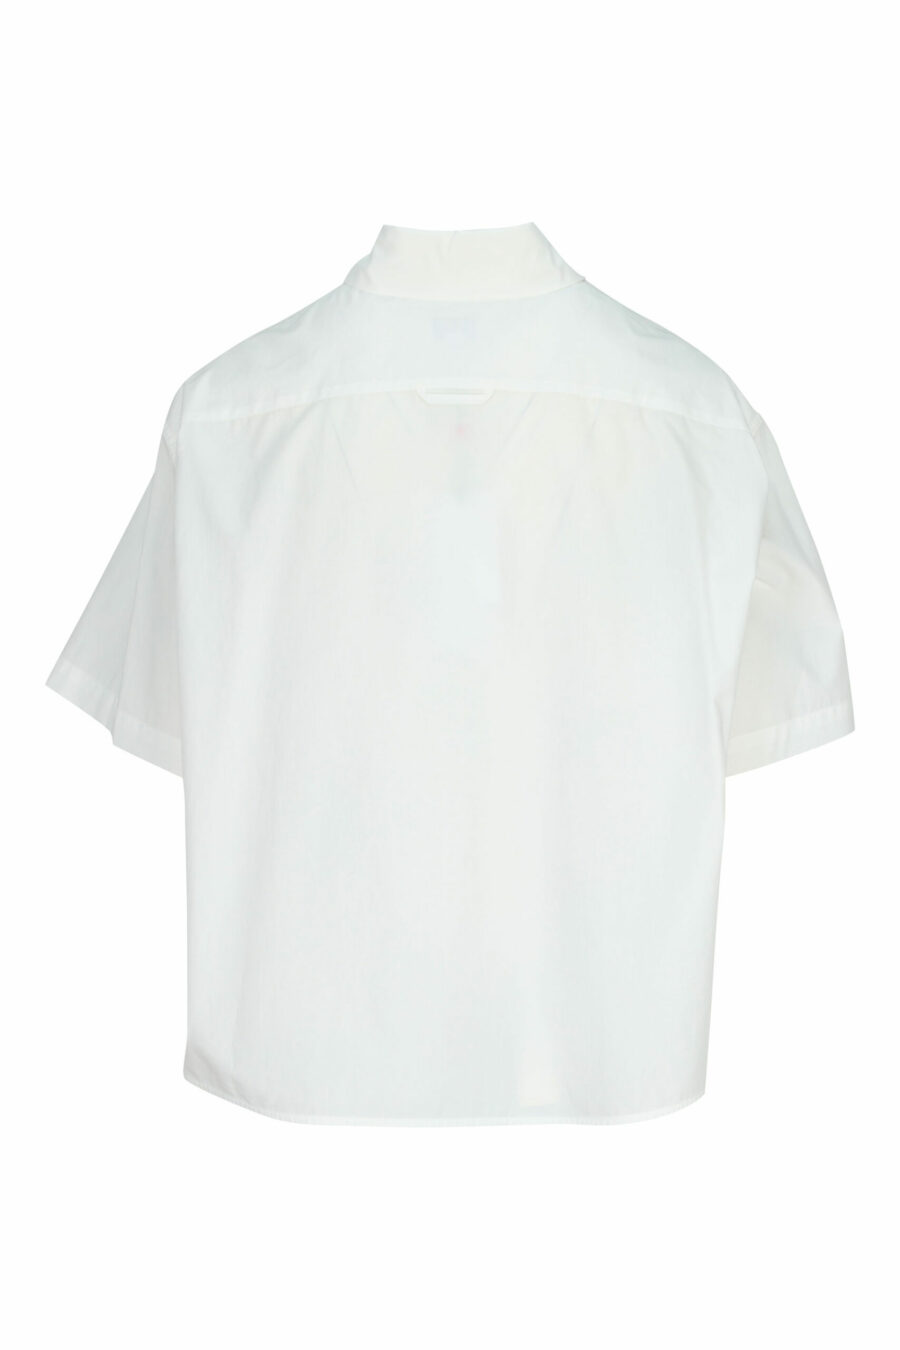 Camisa blanca manga corta con minilogo "boke flower" negro - 3612230589063 1 scaled